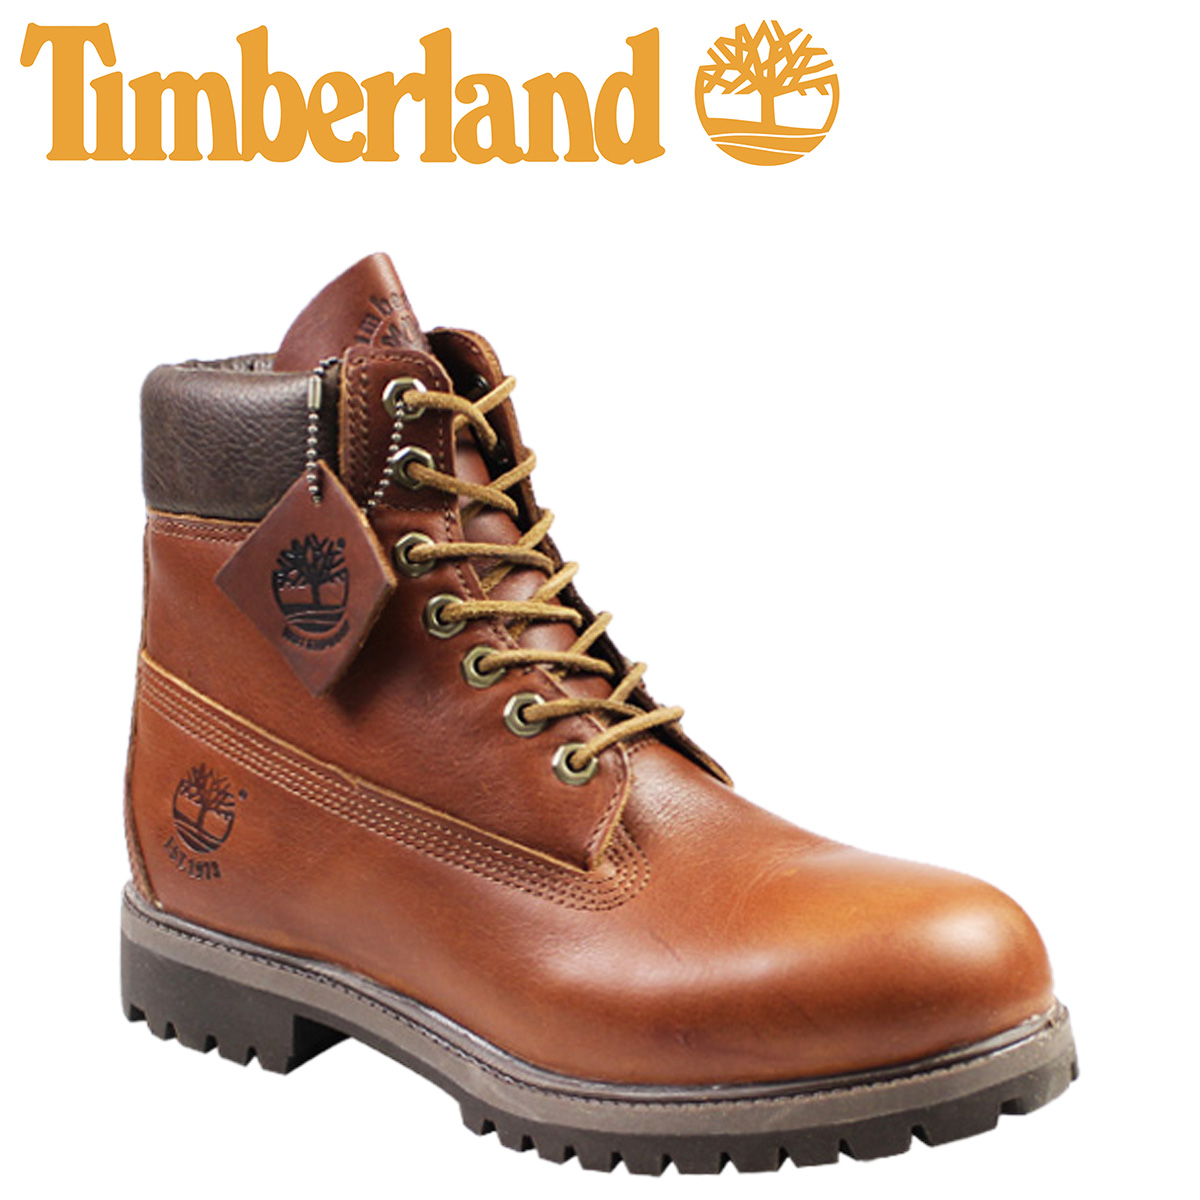 timberland 6 inch anniversary boots